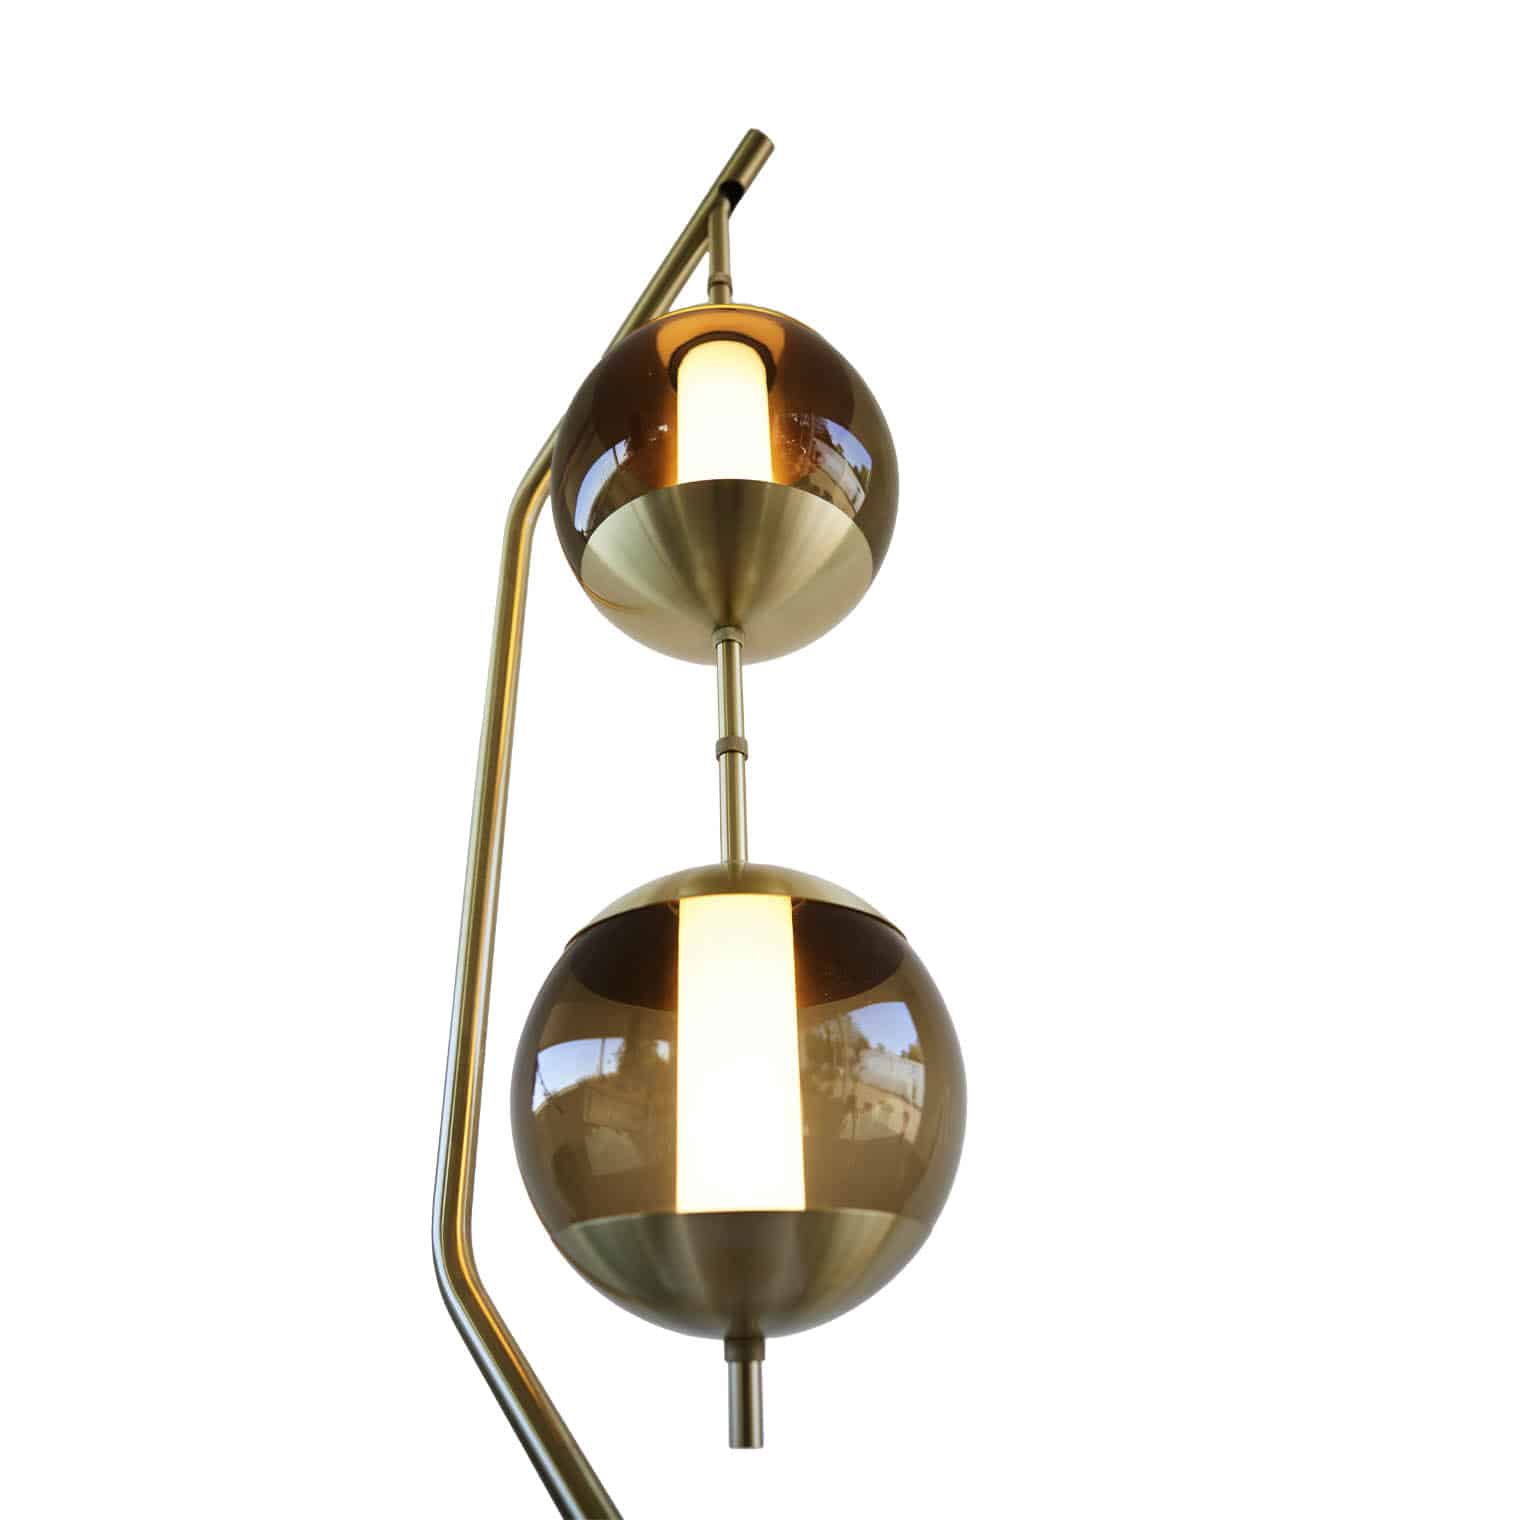 Monroe Rubn Lamp for perfect light